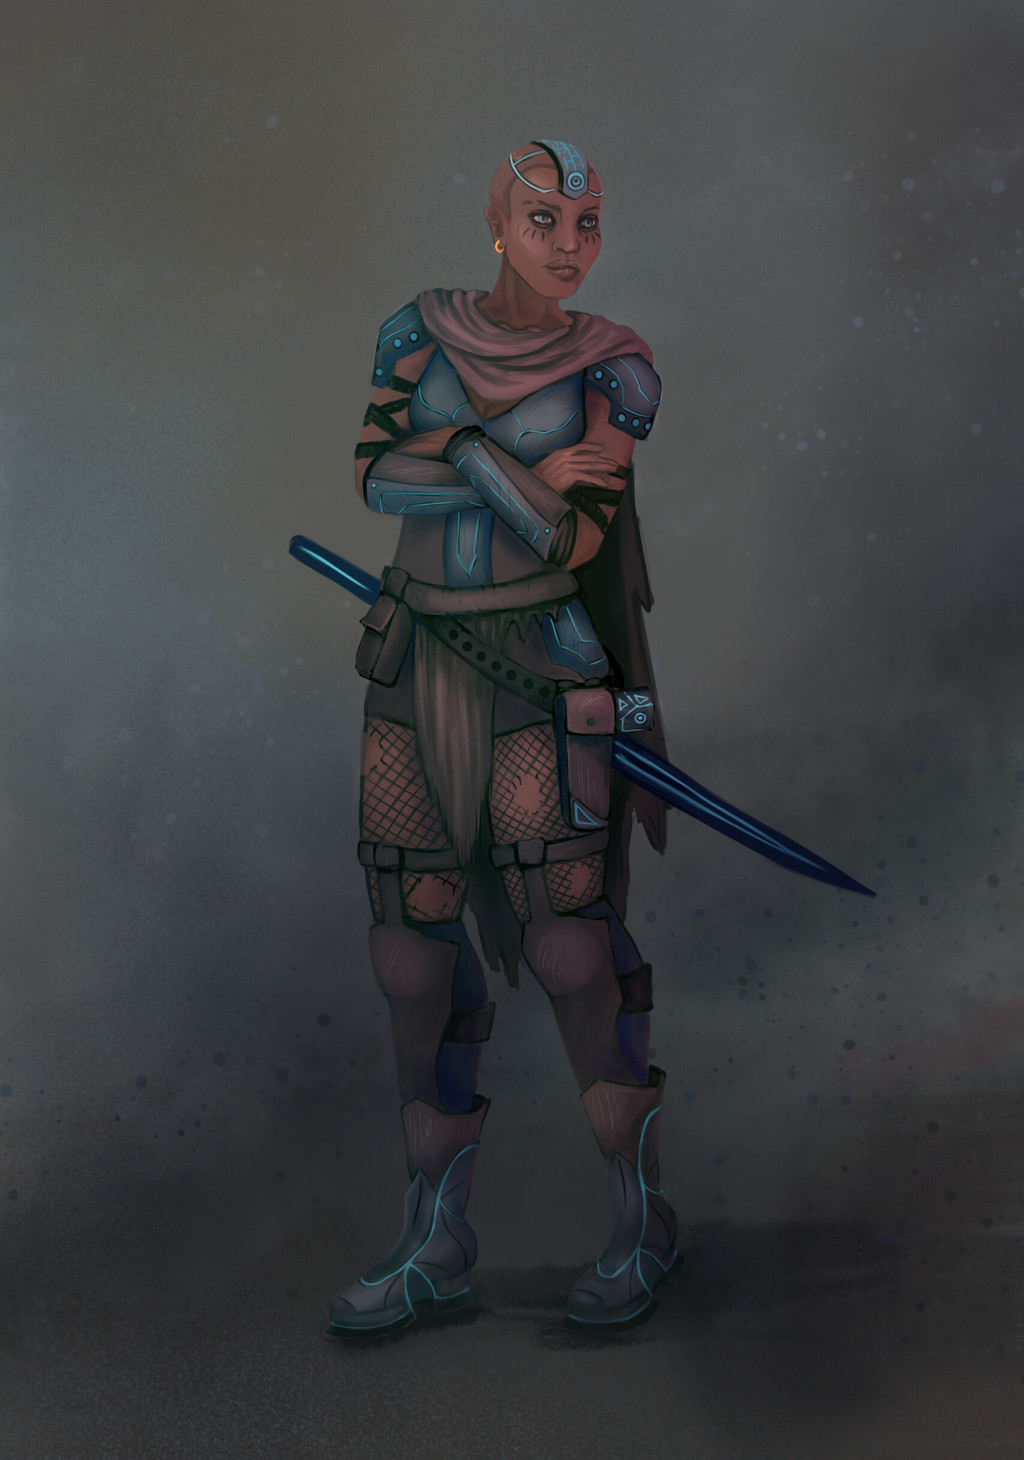 Most recent image: Female warrior